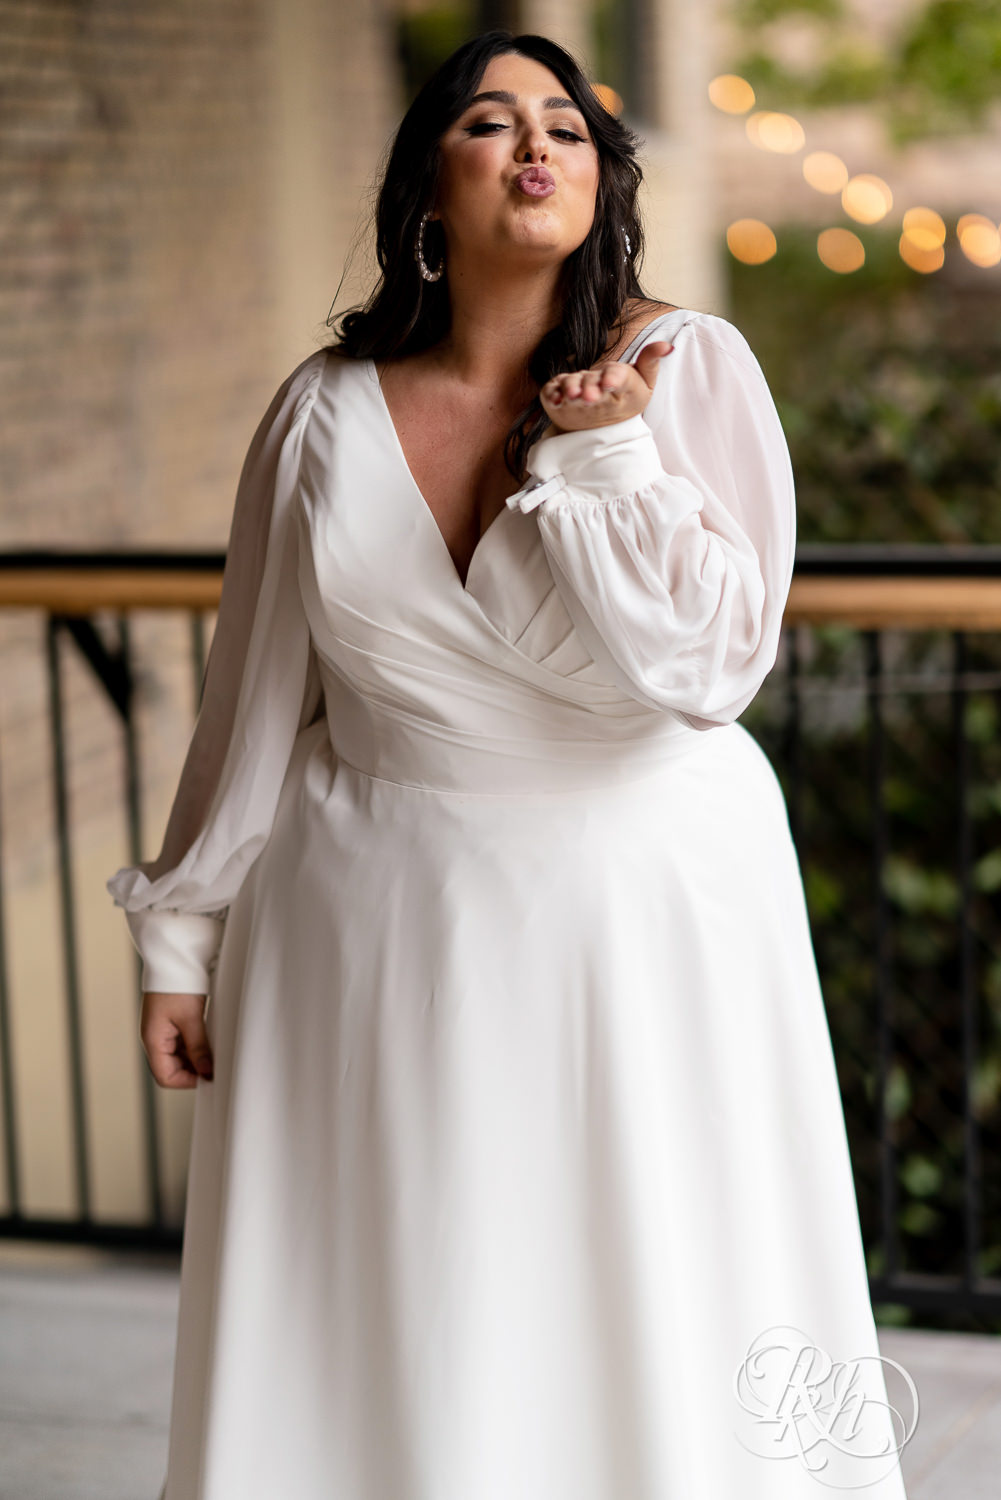 Plus size bride smiling in wedding dresses in Minneapolis, Minnesota blowing kiss.